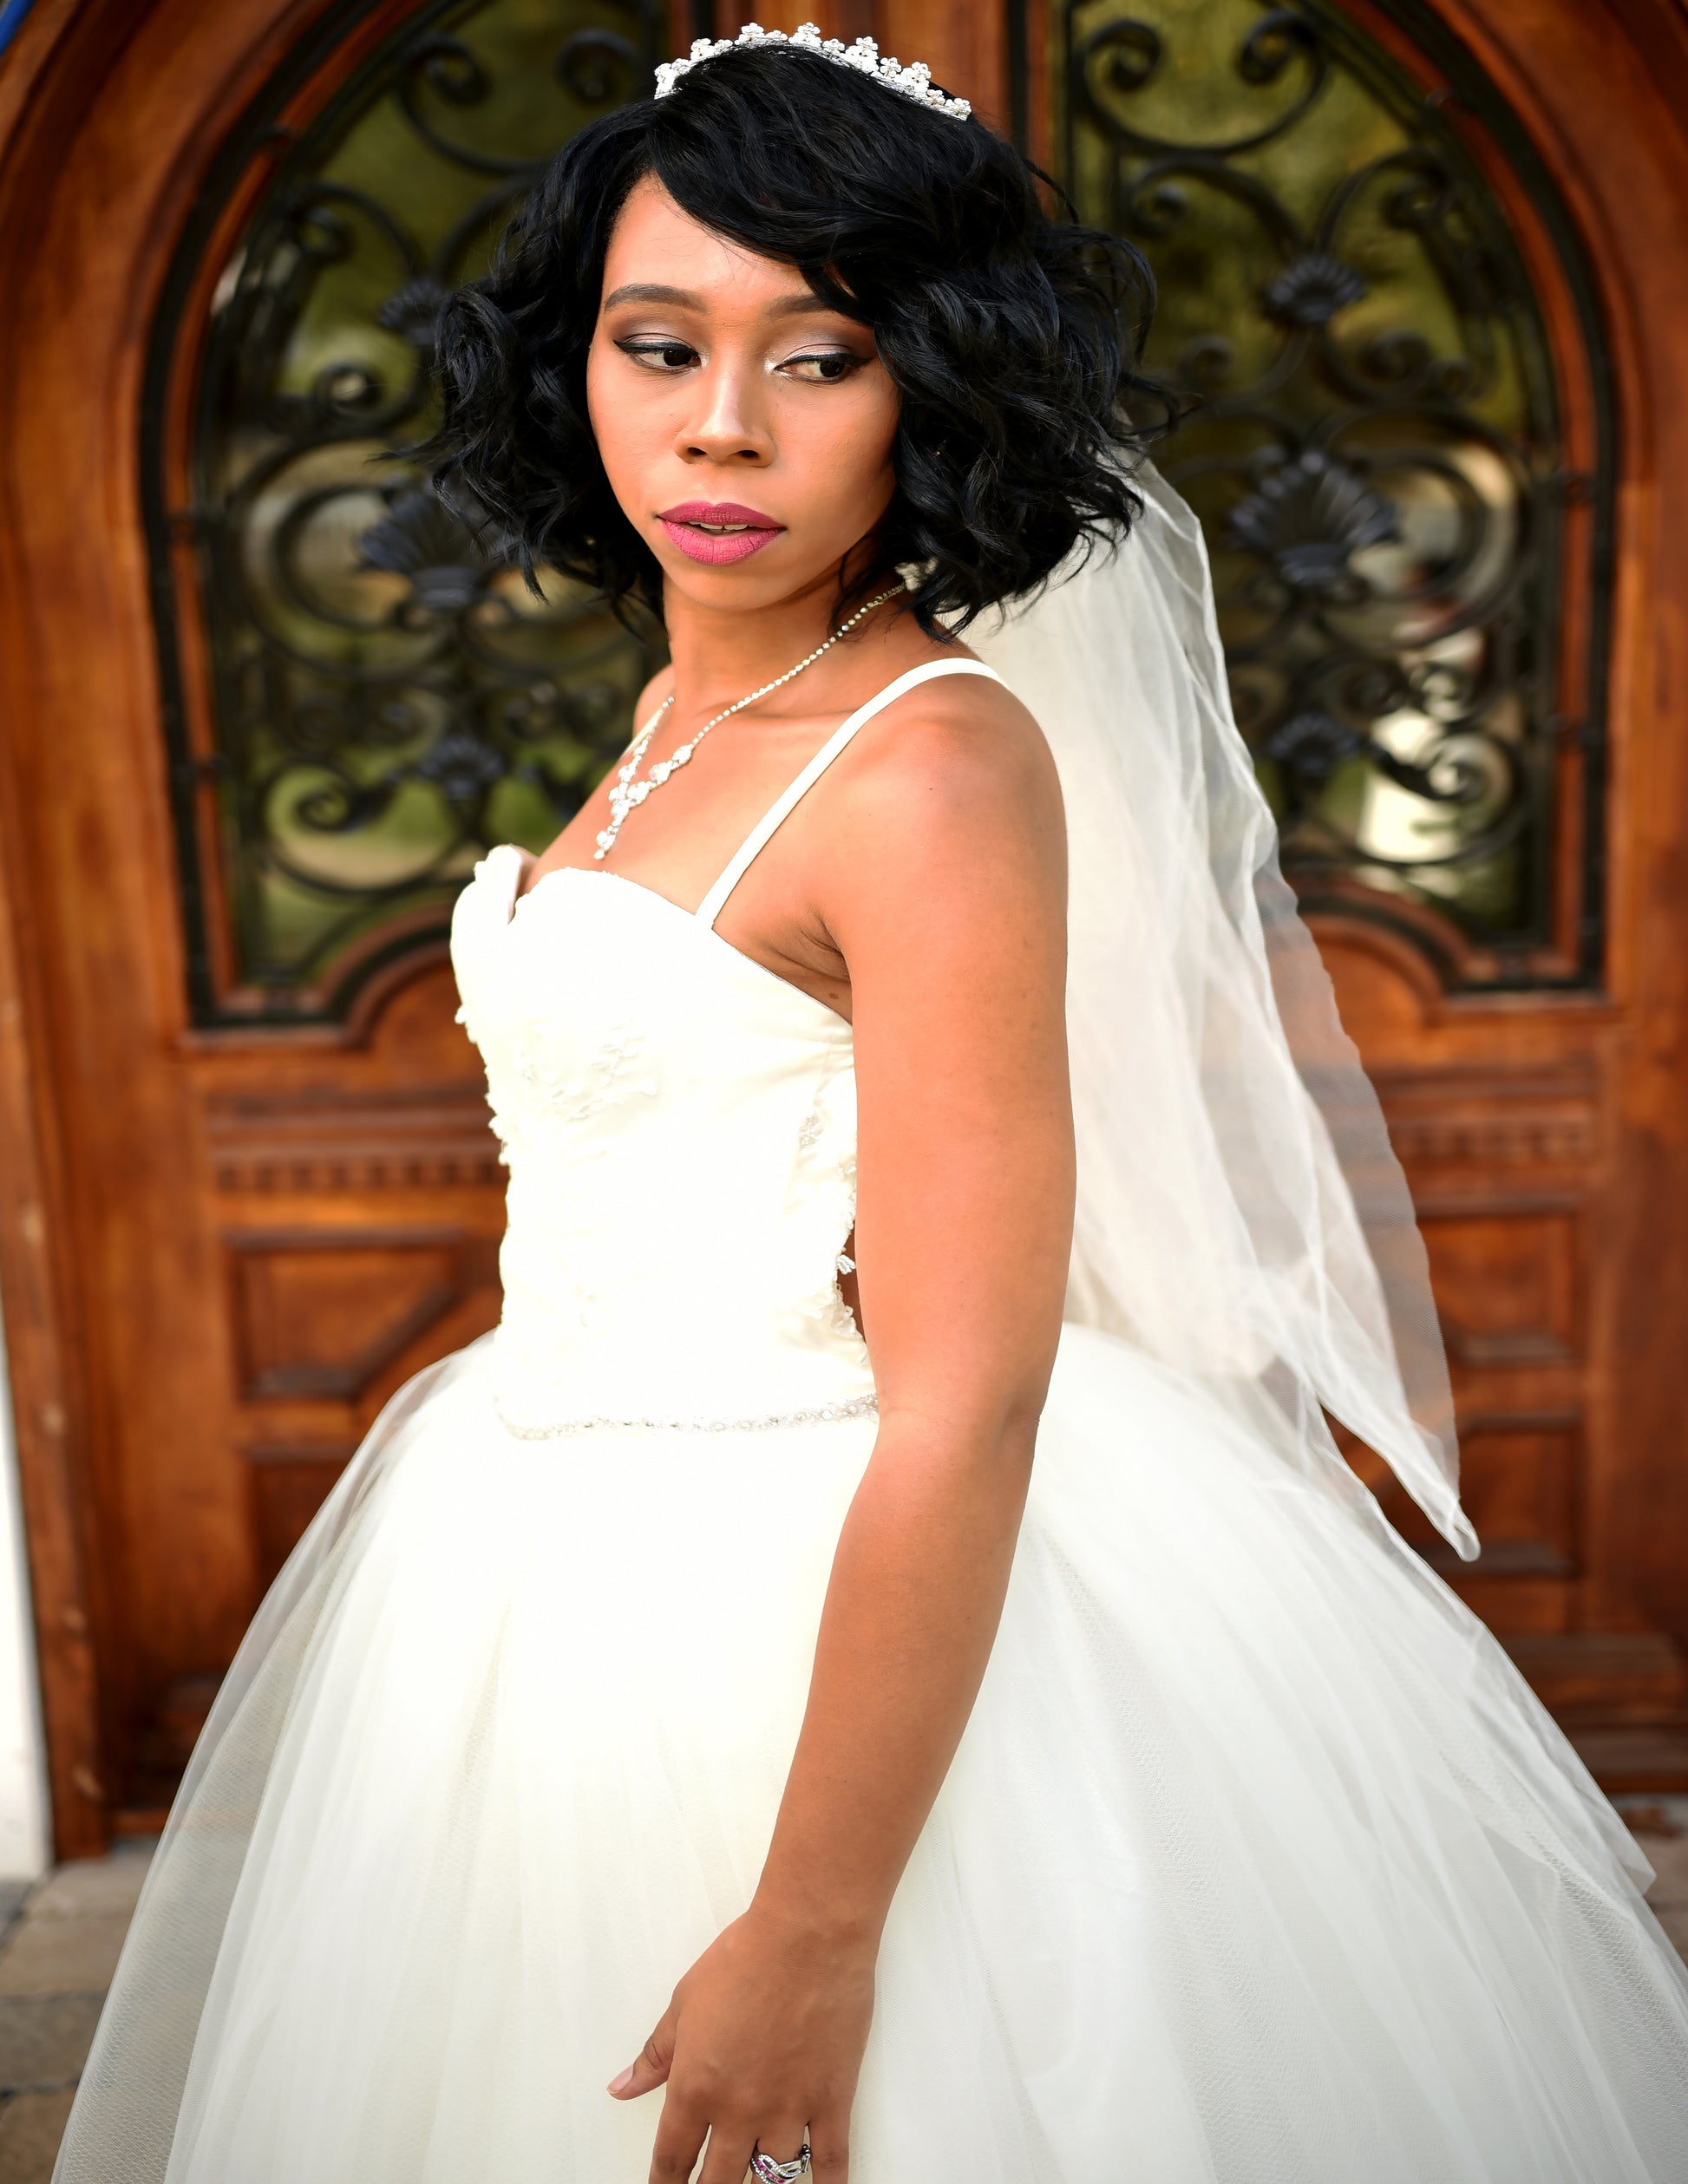 EXCLUSIVE! Gabrielle Union's Wedding Dress Sketch Revealed